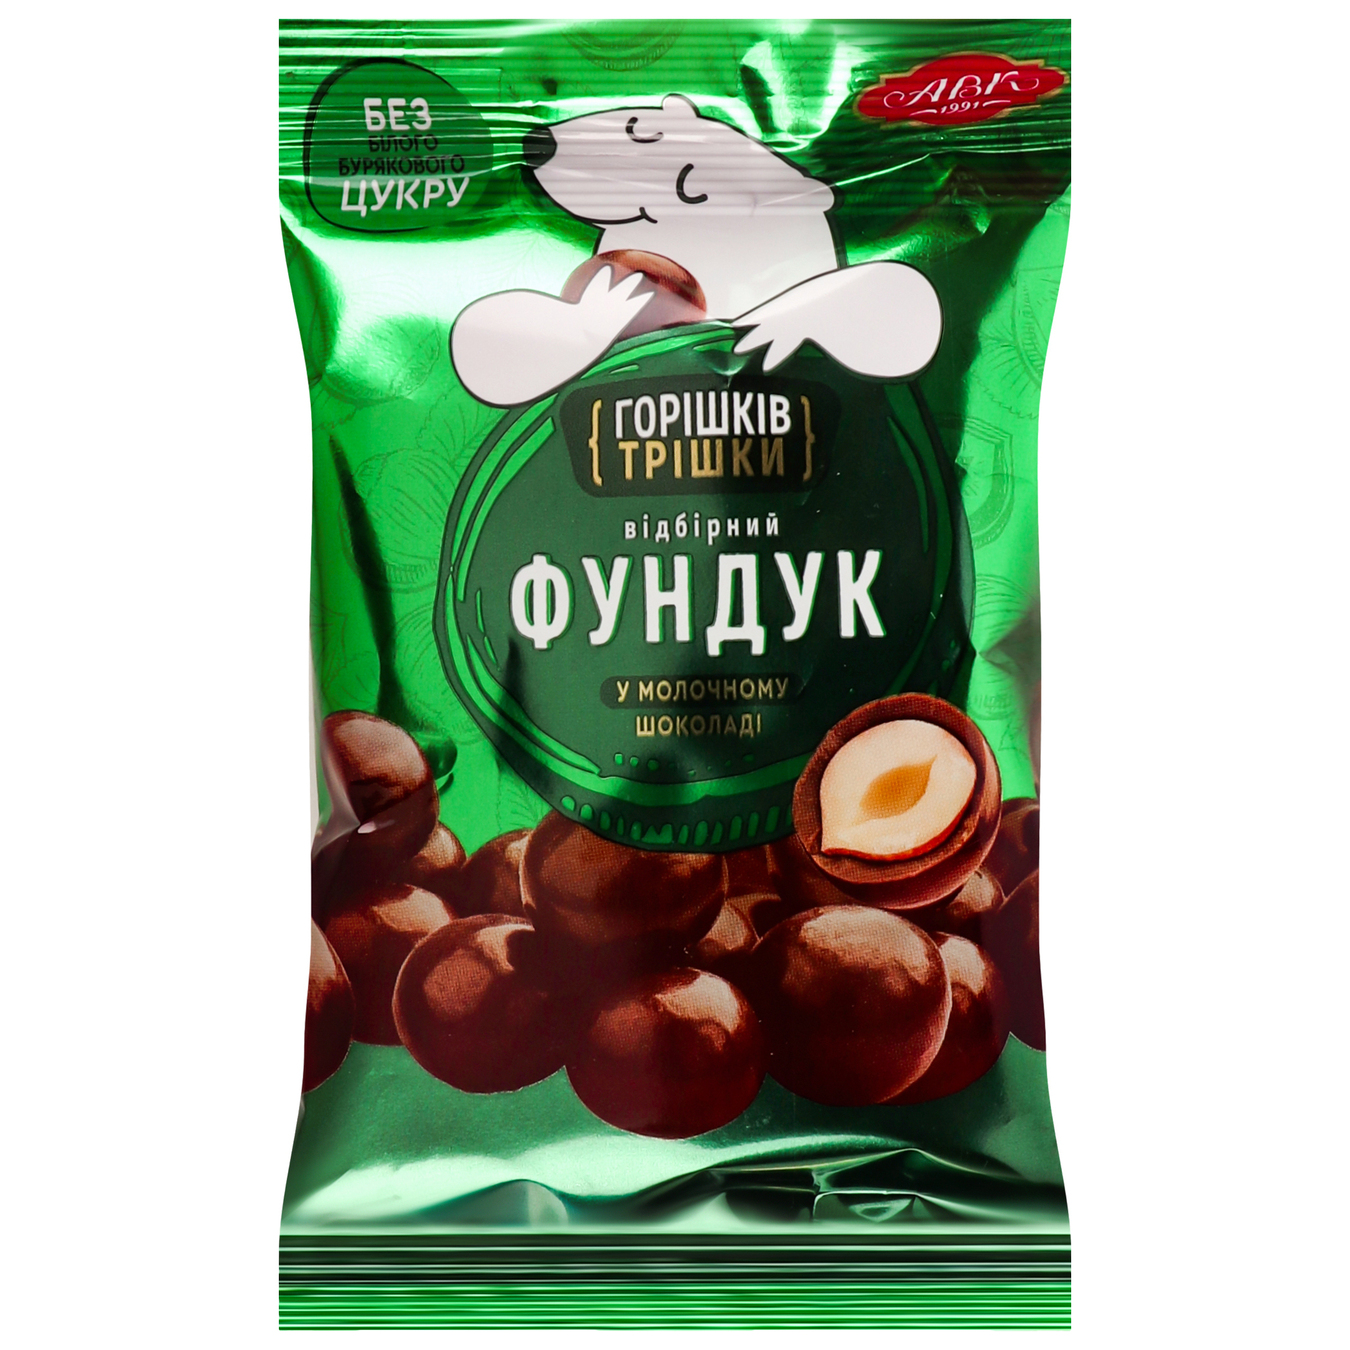 Dragee AVK hazelnut in milk chocolate with fructose 75g